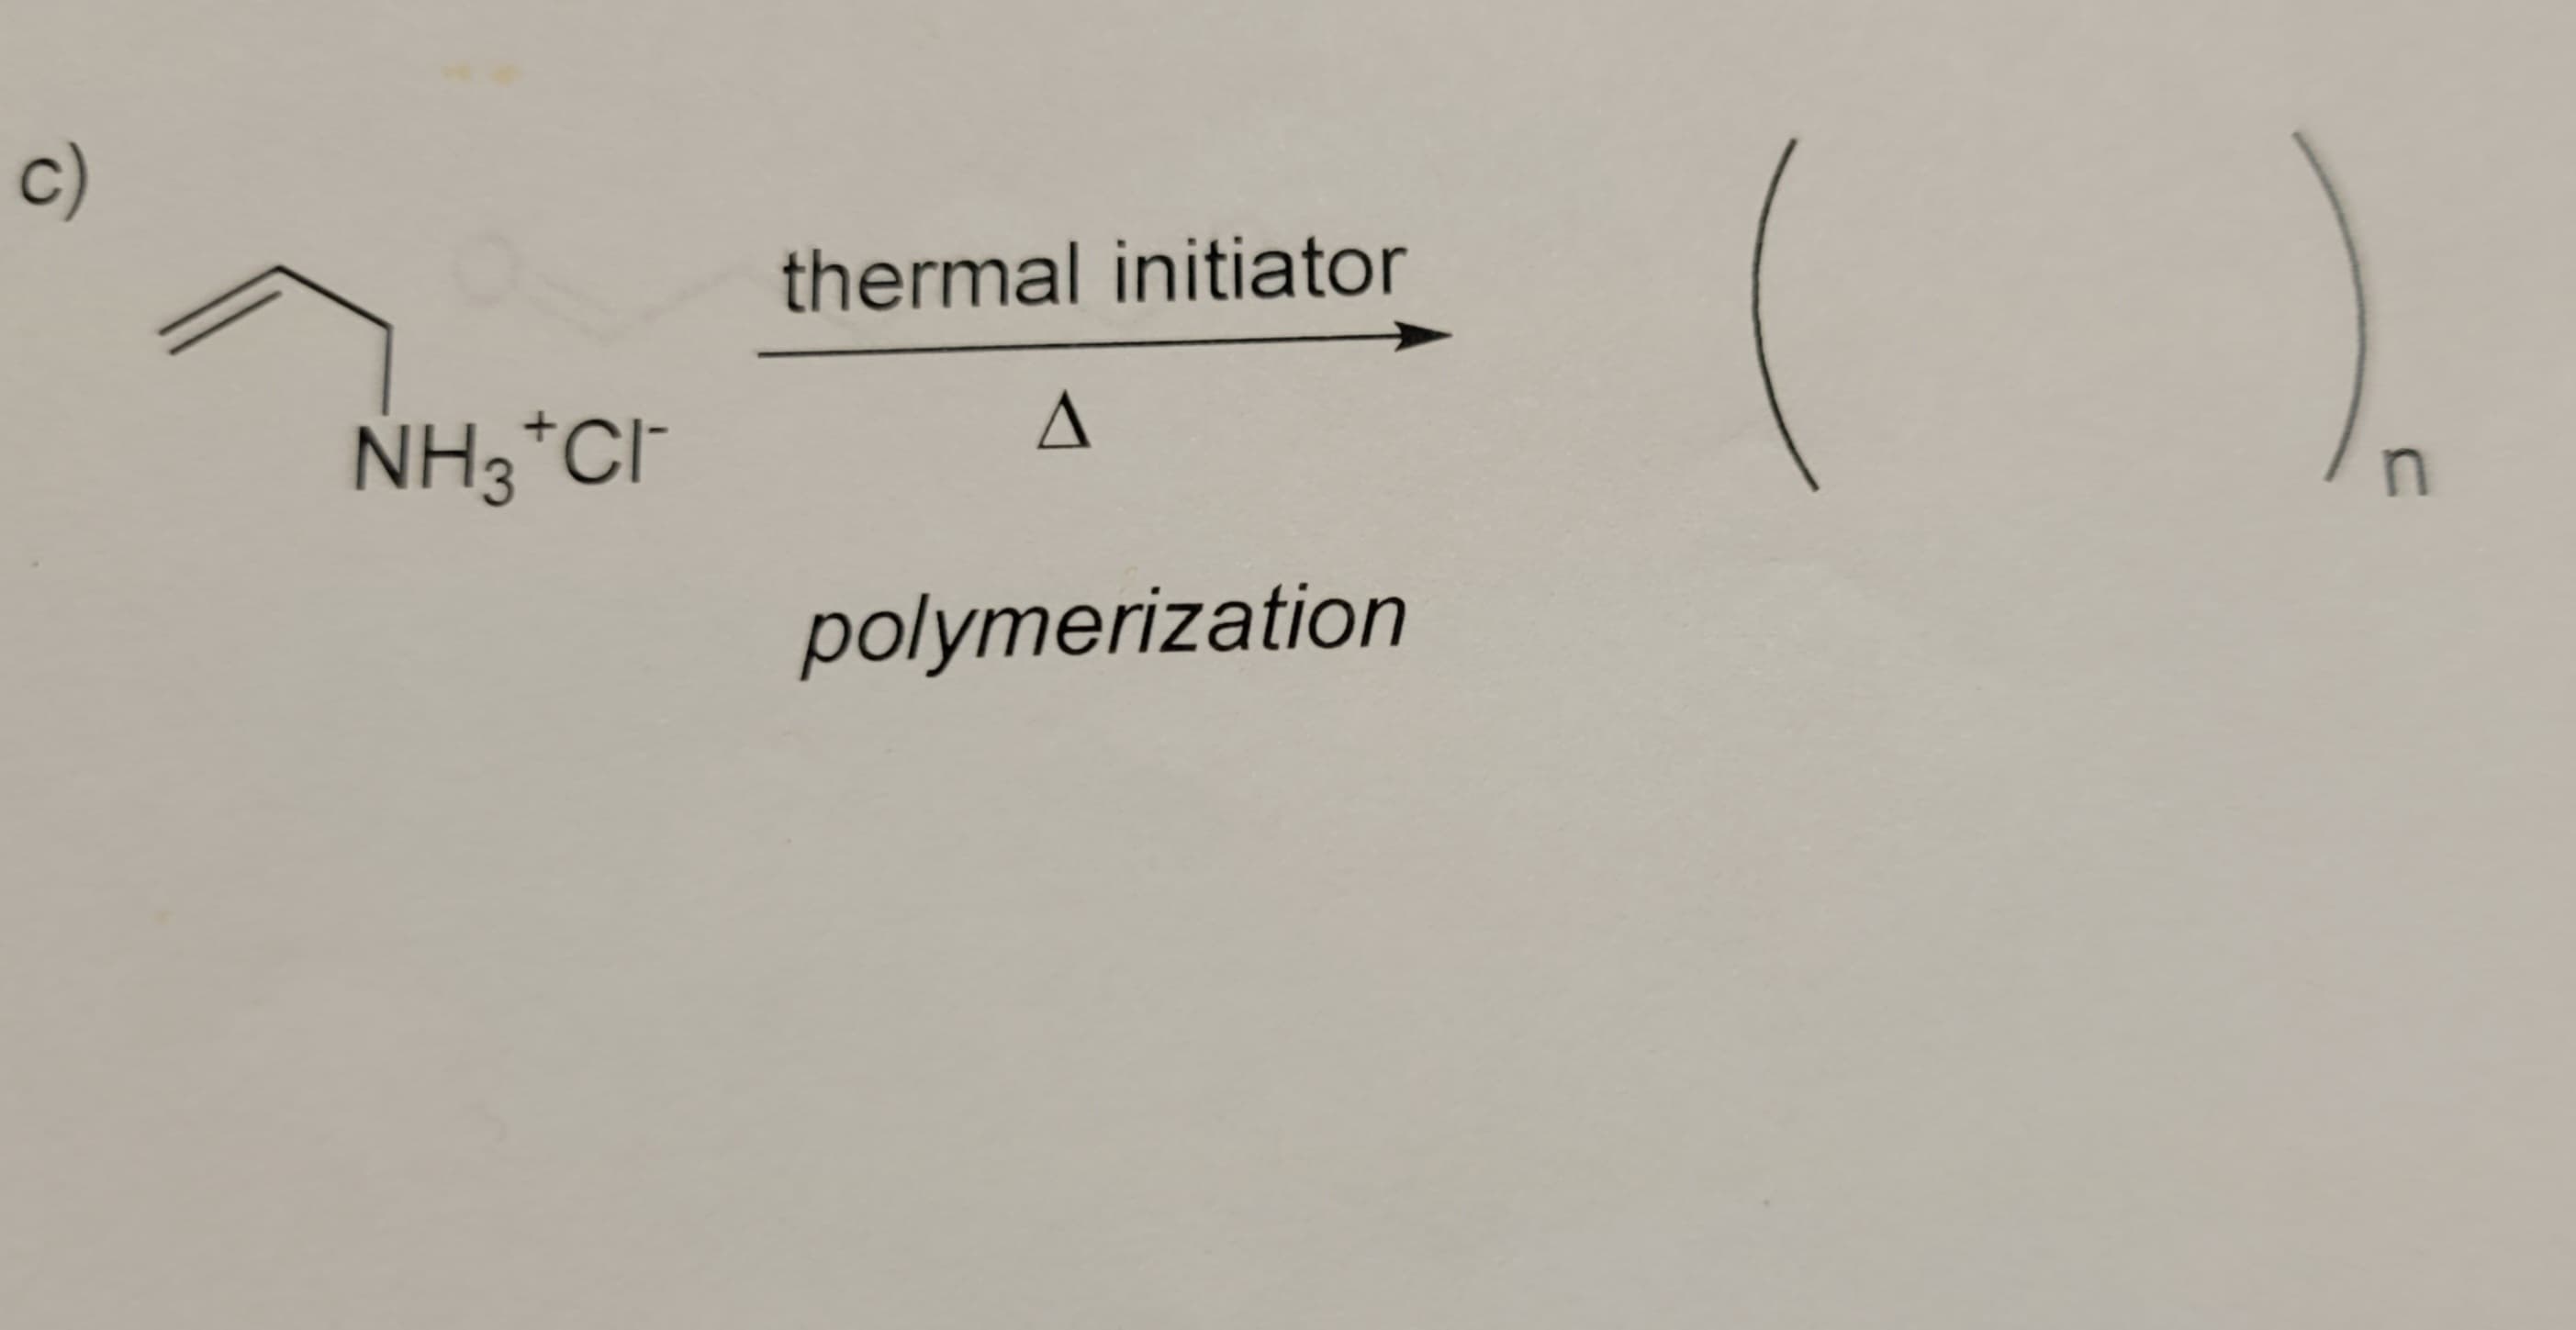 c)
NH3*CI
thermal initiator
A
polymerization
( ).
n